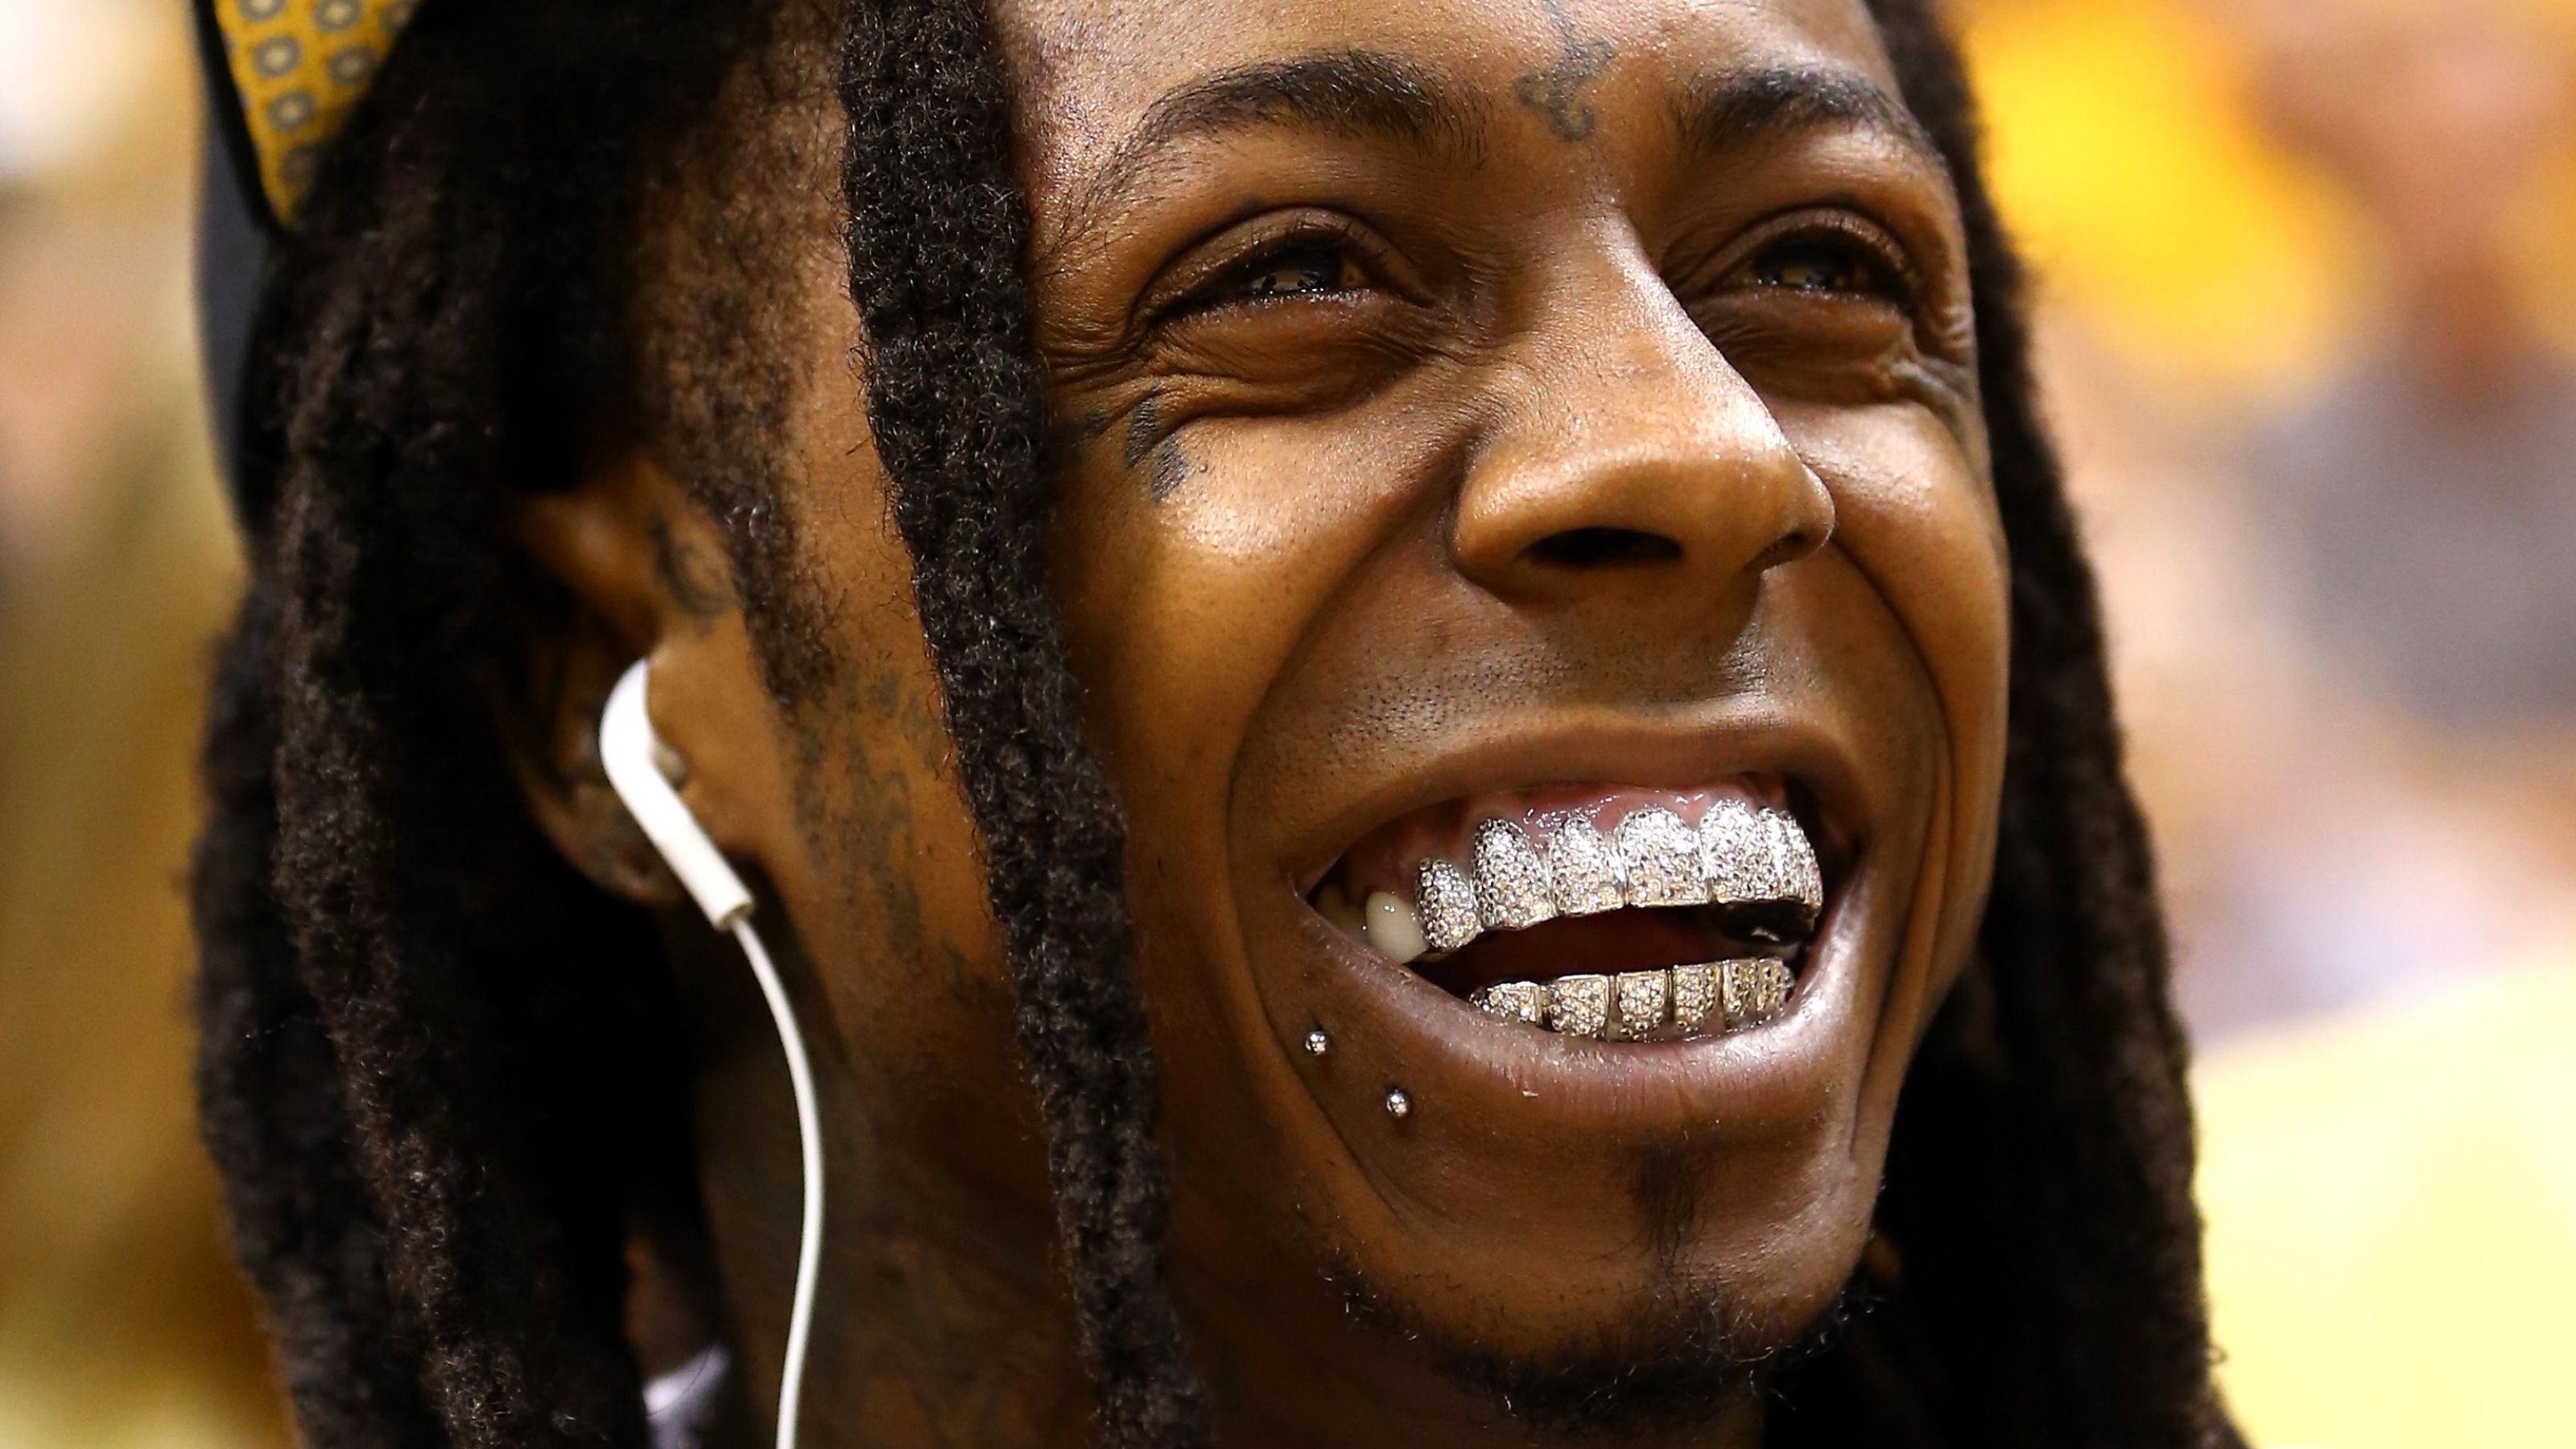 Lil Wayne, HD wallpapers, High-resolution images, Stunning visuals, 3200x1800 HD Desktop